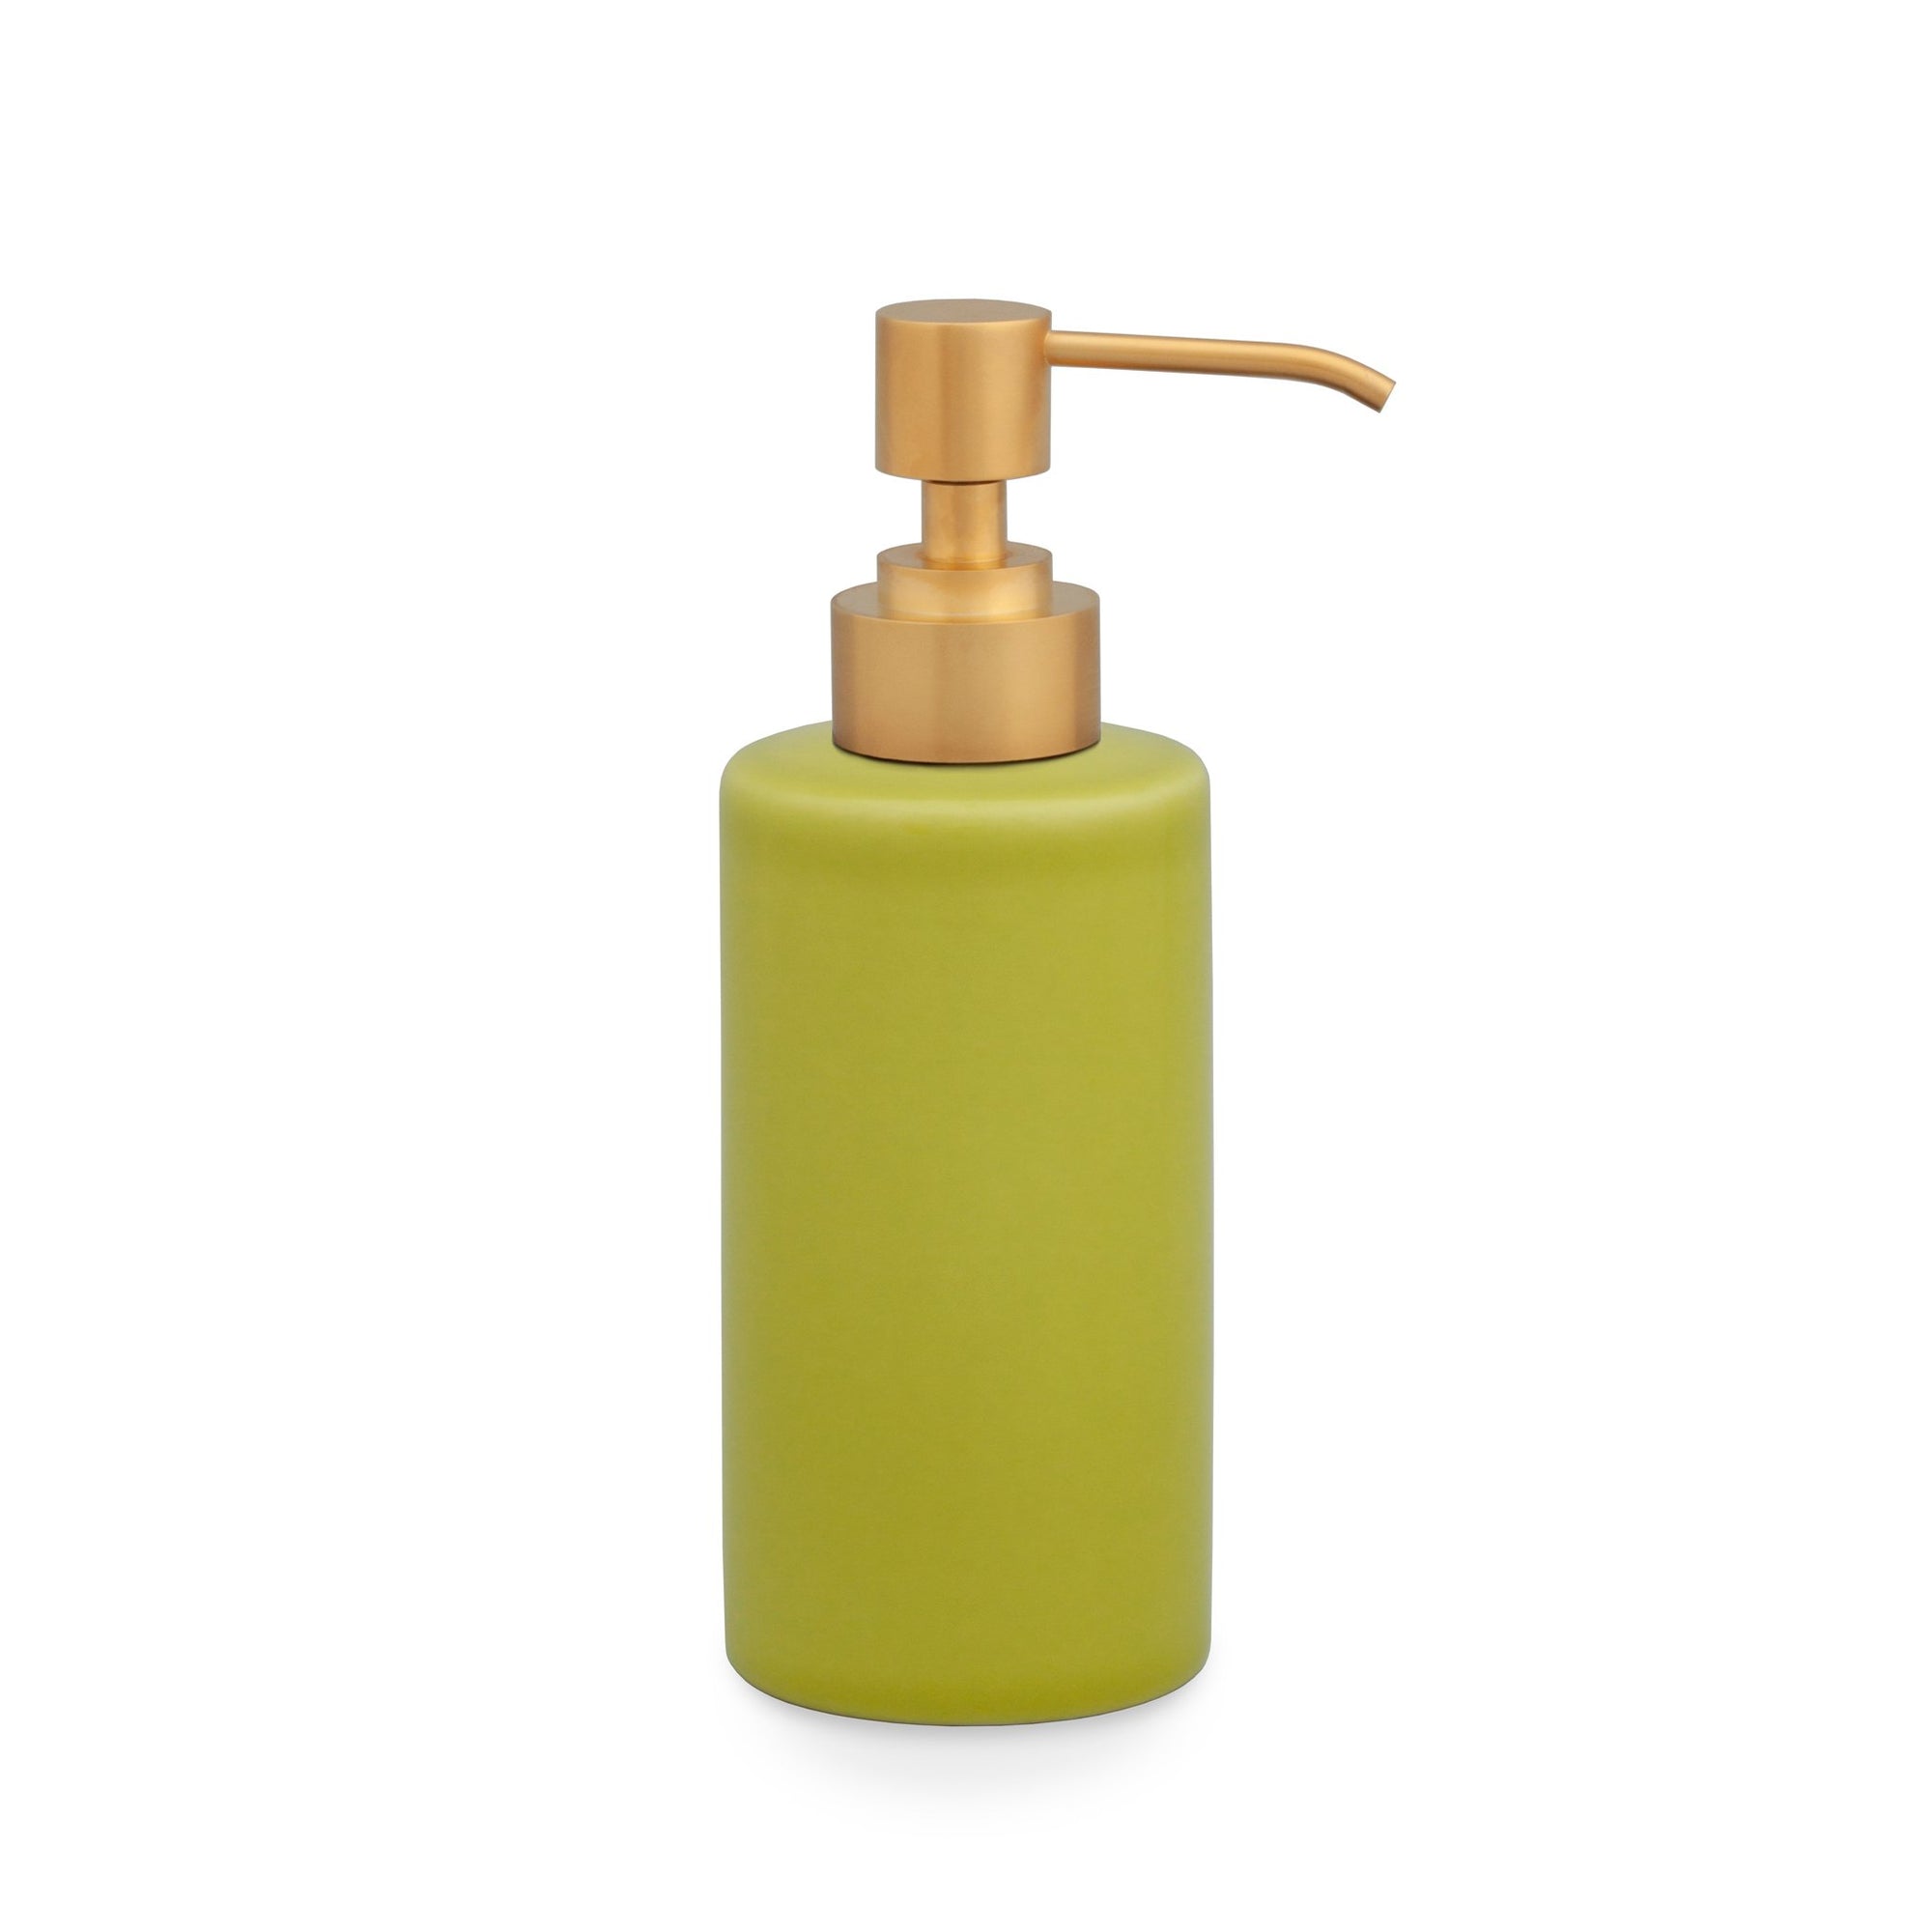 Venosa Gold and Silver Ceramic Soap Dispenser - Buy Online – Sophie and Ella